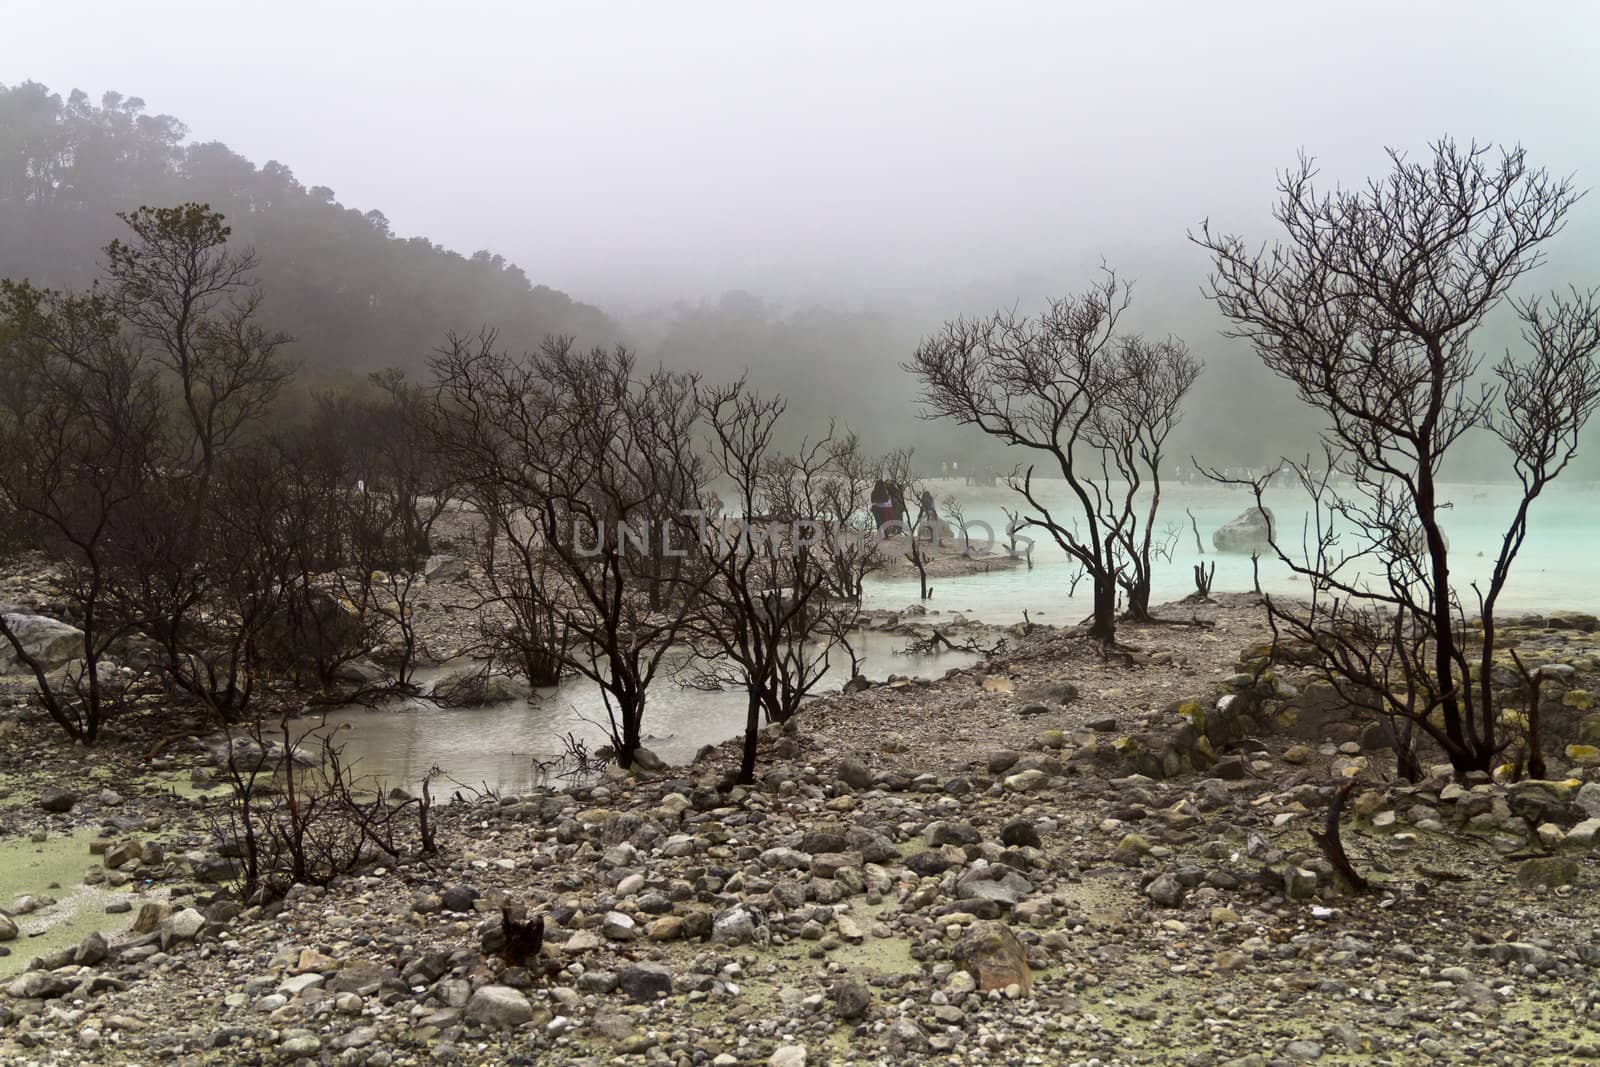 rows of dead trees atthe edge of volcanic crater lake of Kawah Putih, Bandung Indonesia